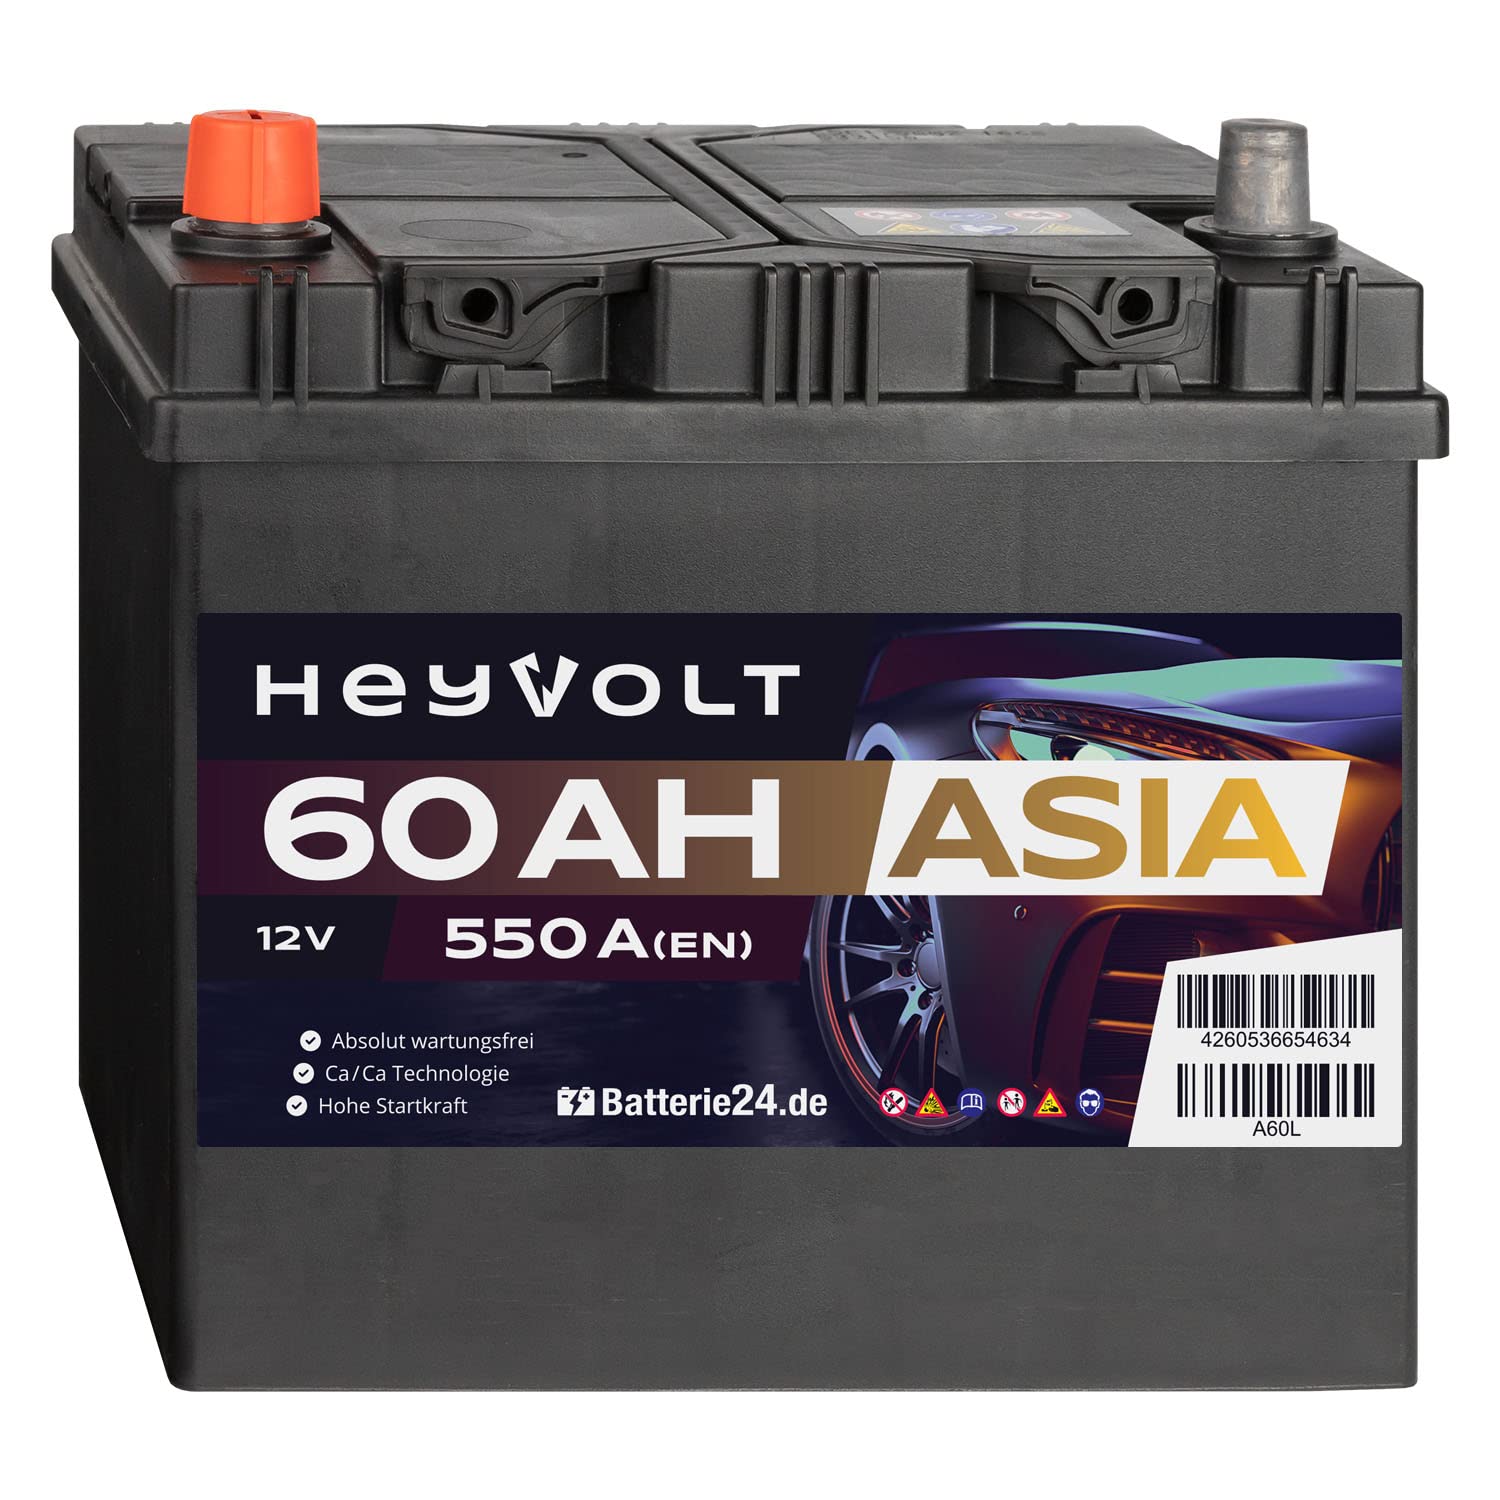 HeyVolt Asia Autobatterie 12V 60Ah 550A/EN Starterbatterie, absolut wartungsfrei, Pluspol Links von Batterie24.de